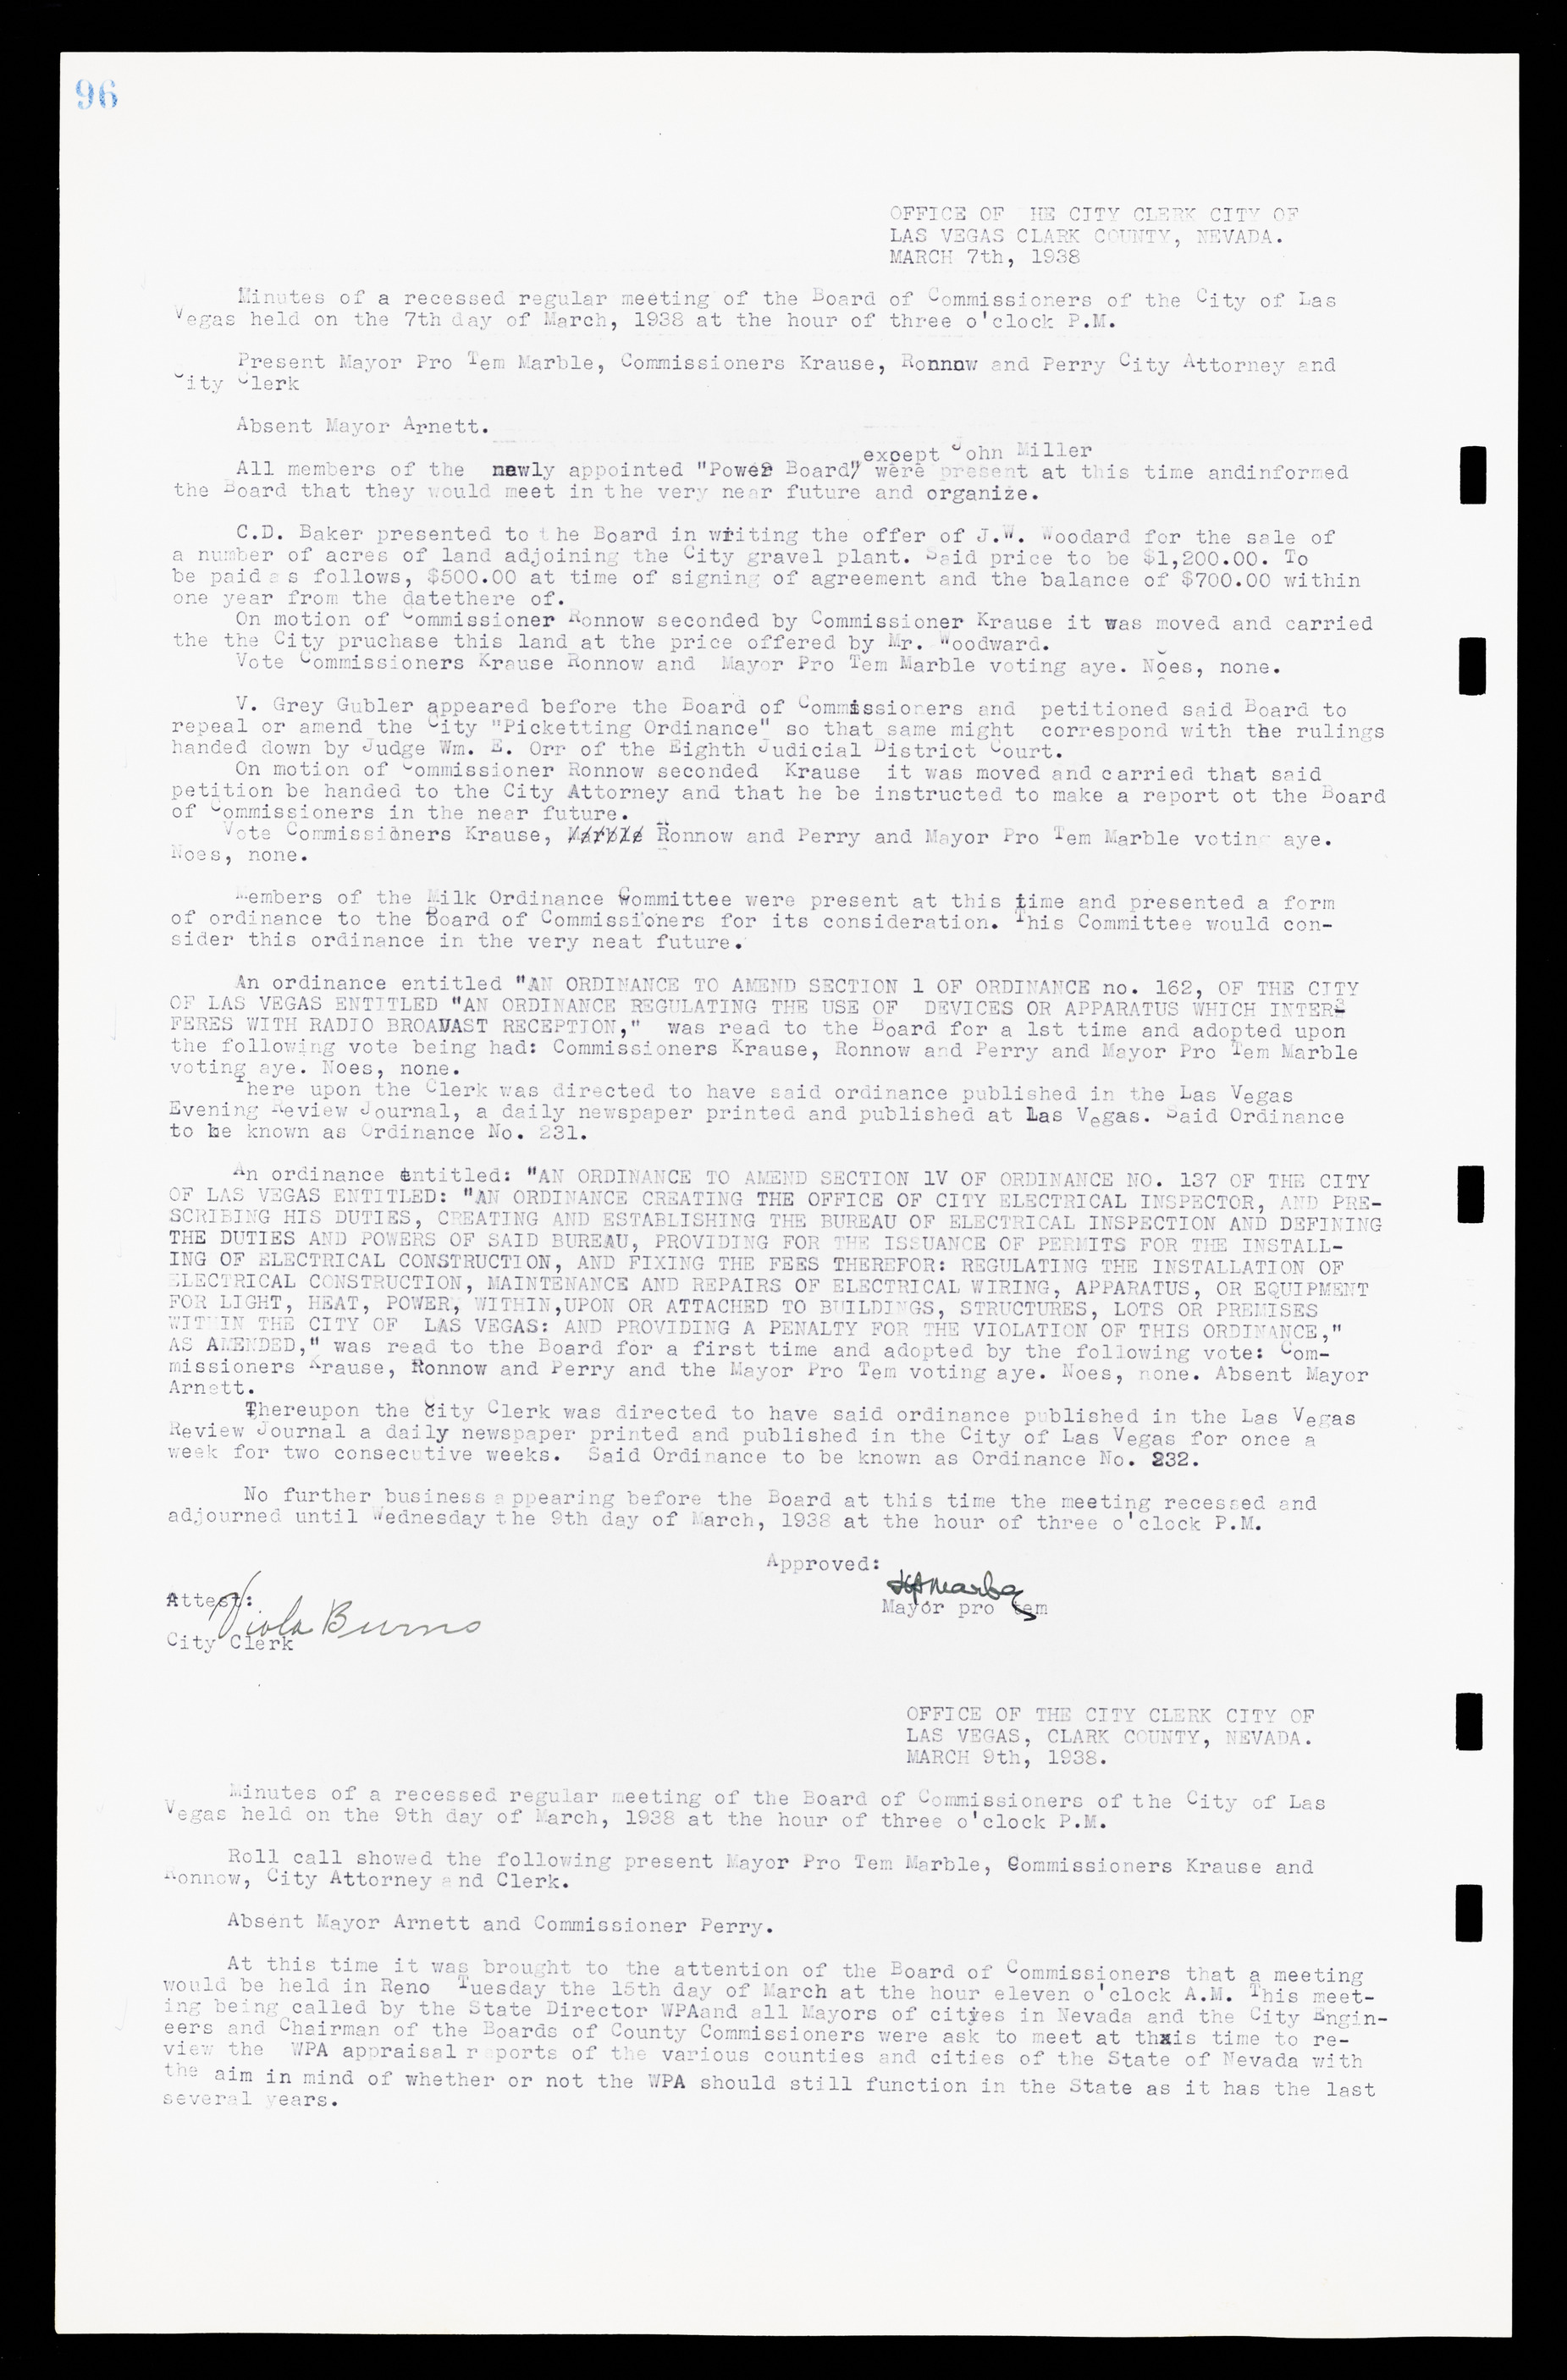 Las Vegas City Commission Minutes, February 17, 1937 to August 4, 1942, lvc000004-107